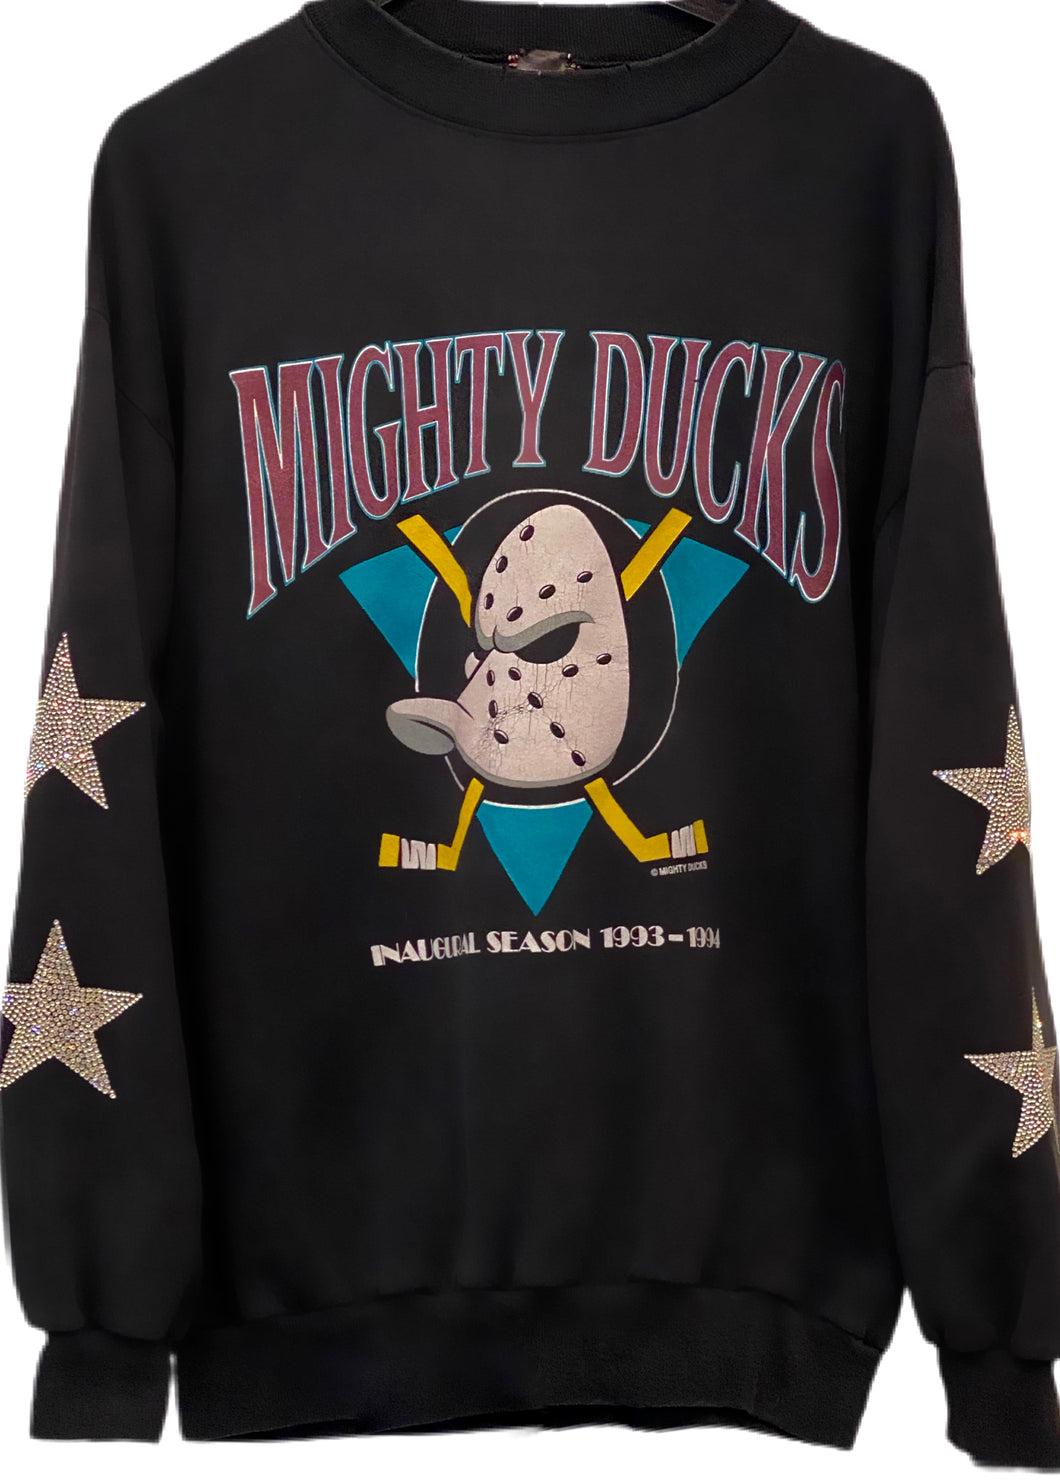 Anaheim Ducks, NHL One of a KIND Vintage “Mighty Ducks” Sweatshirt with Crystal Star Design